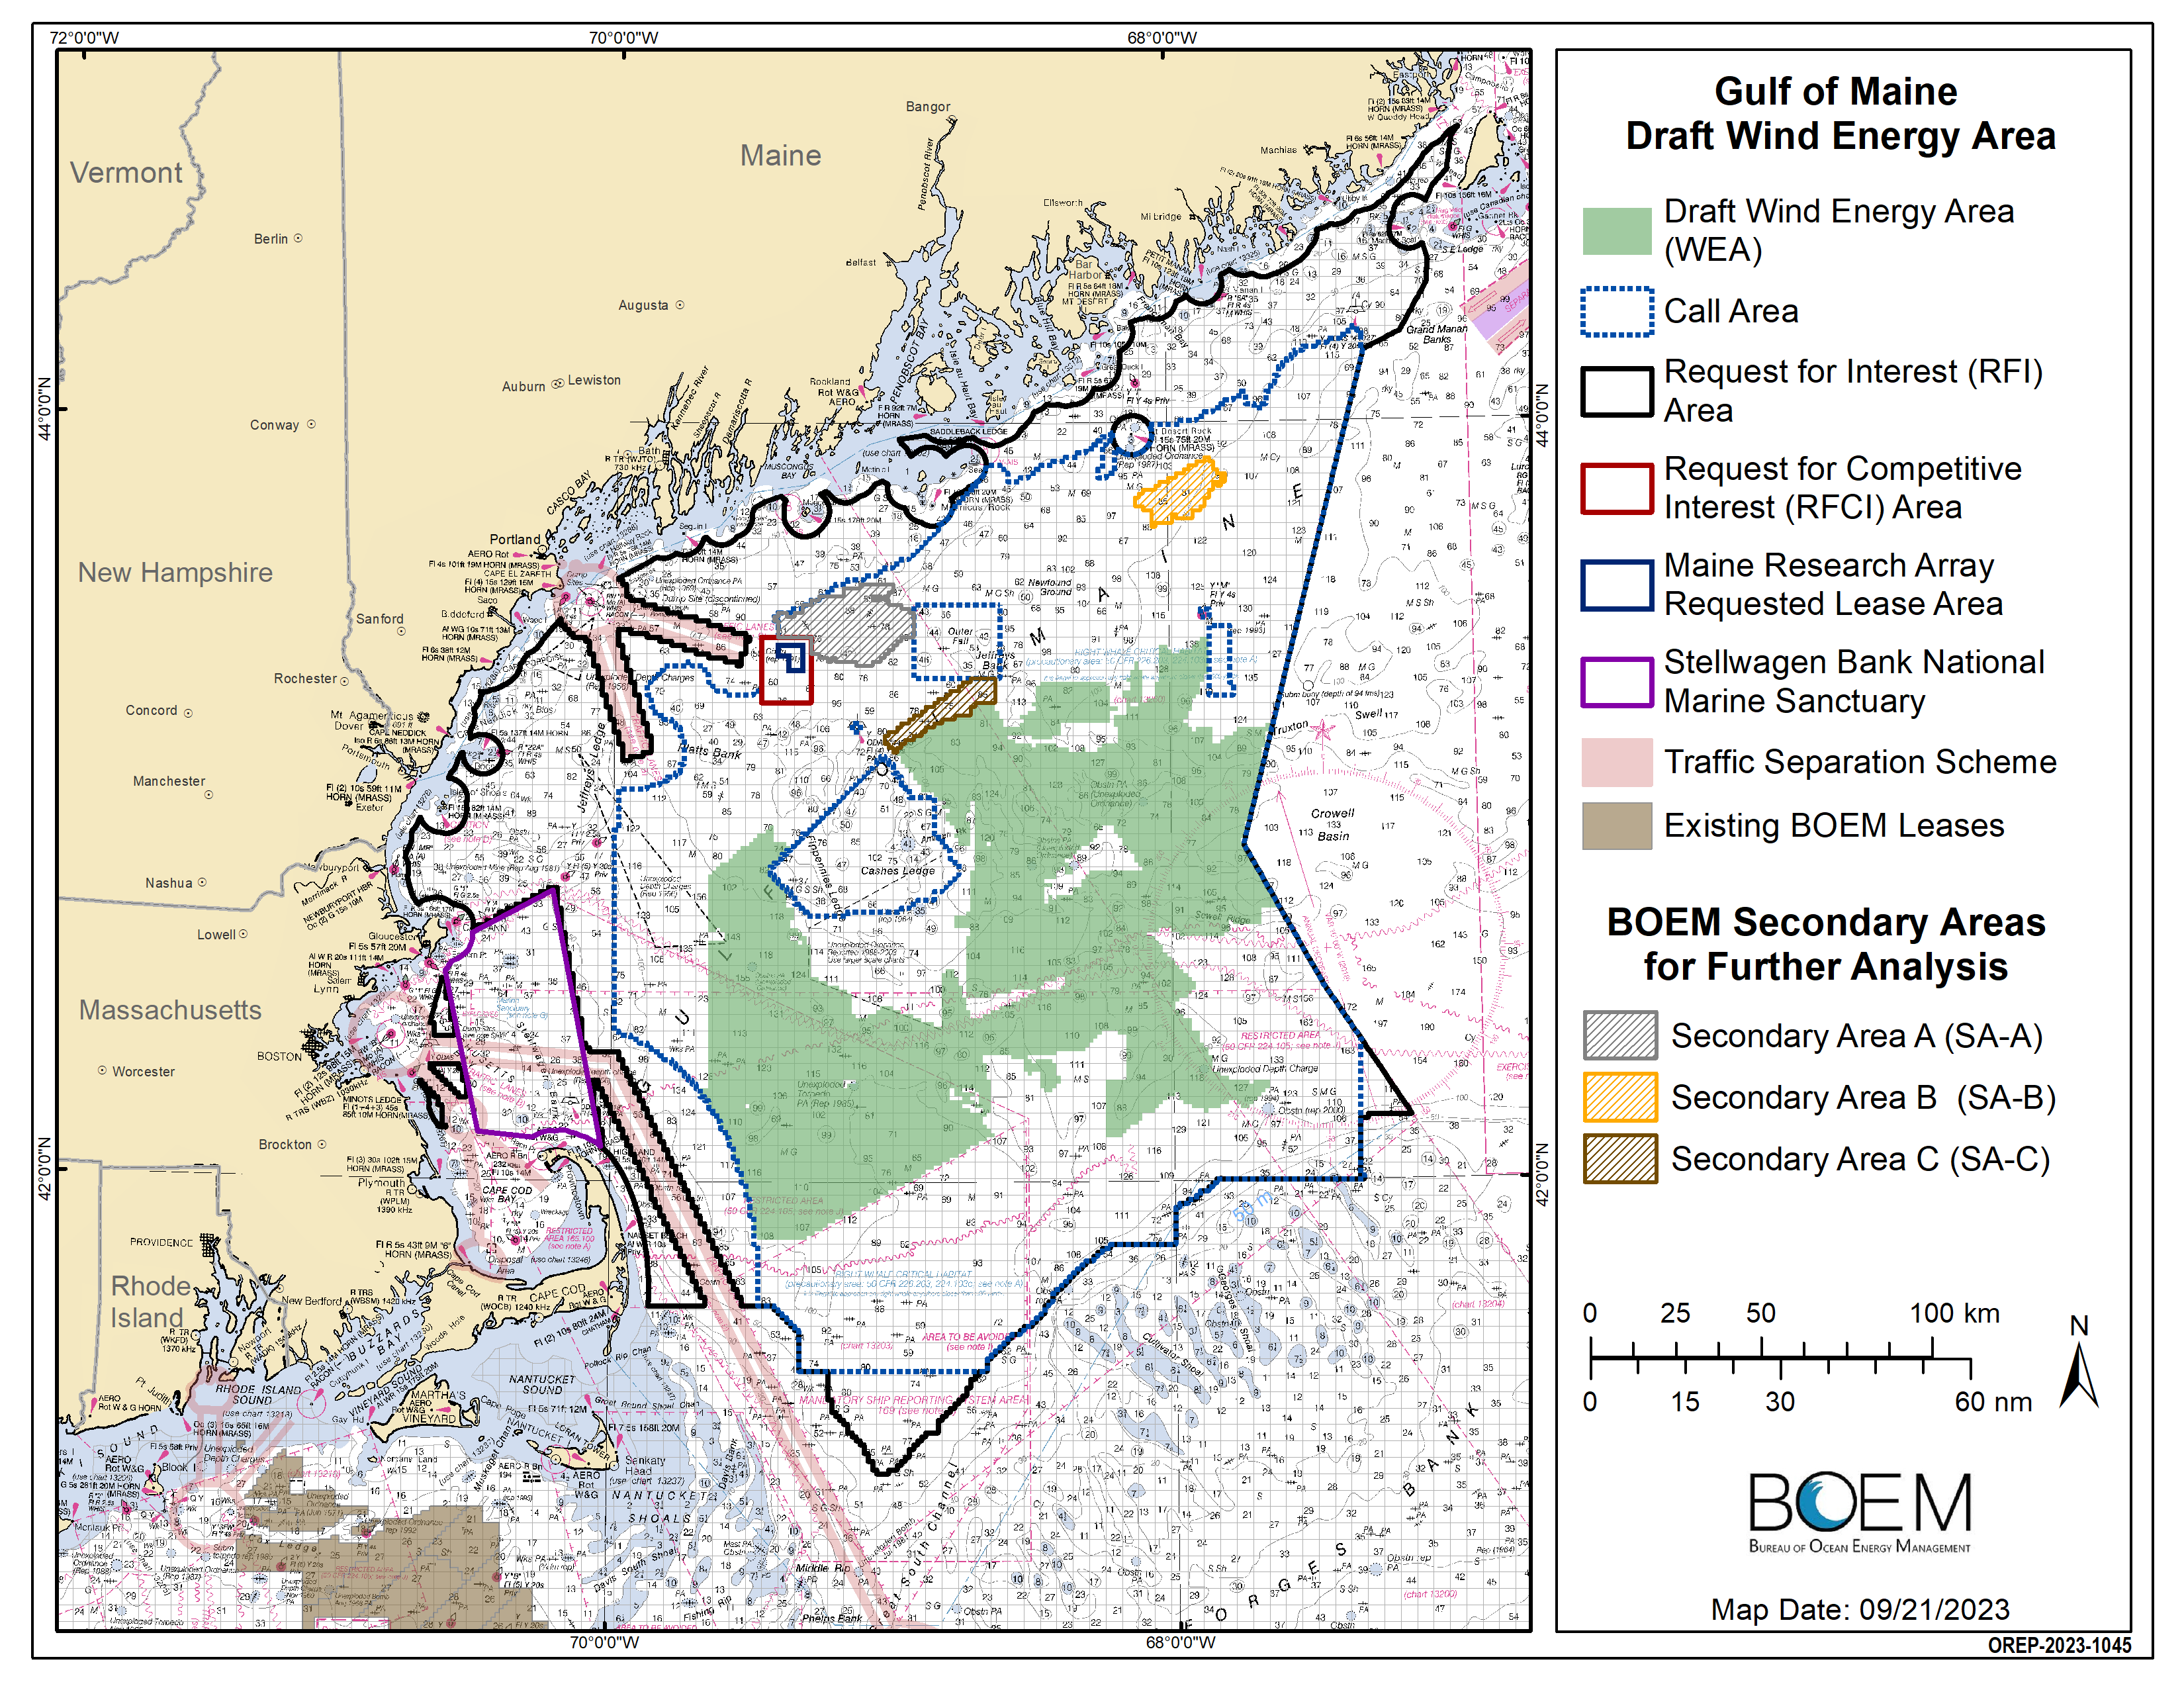 Gulf of Maine  Bureau of Ocean Energy Management